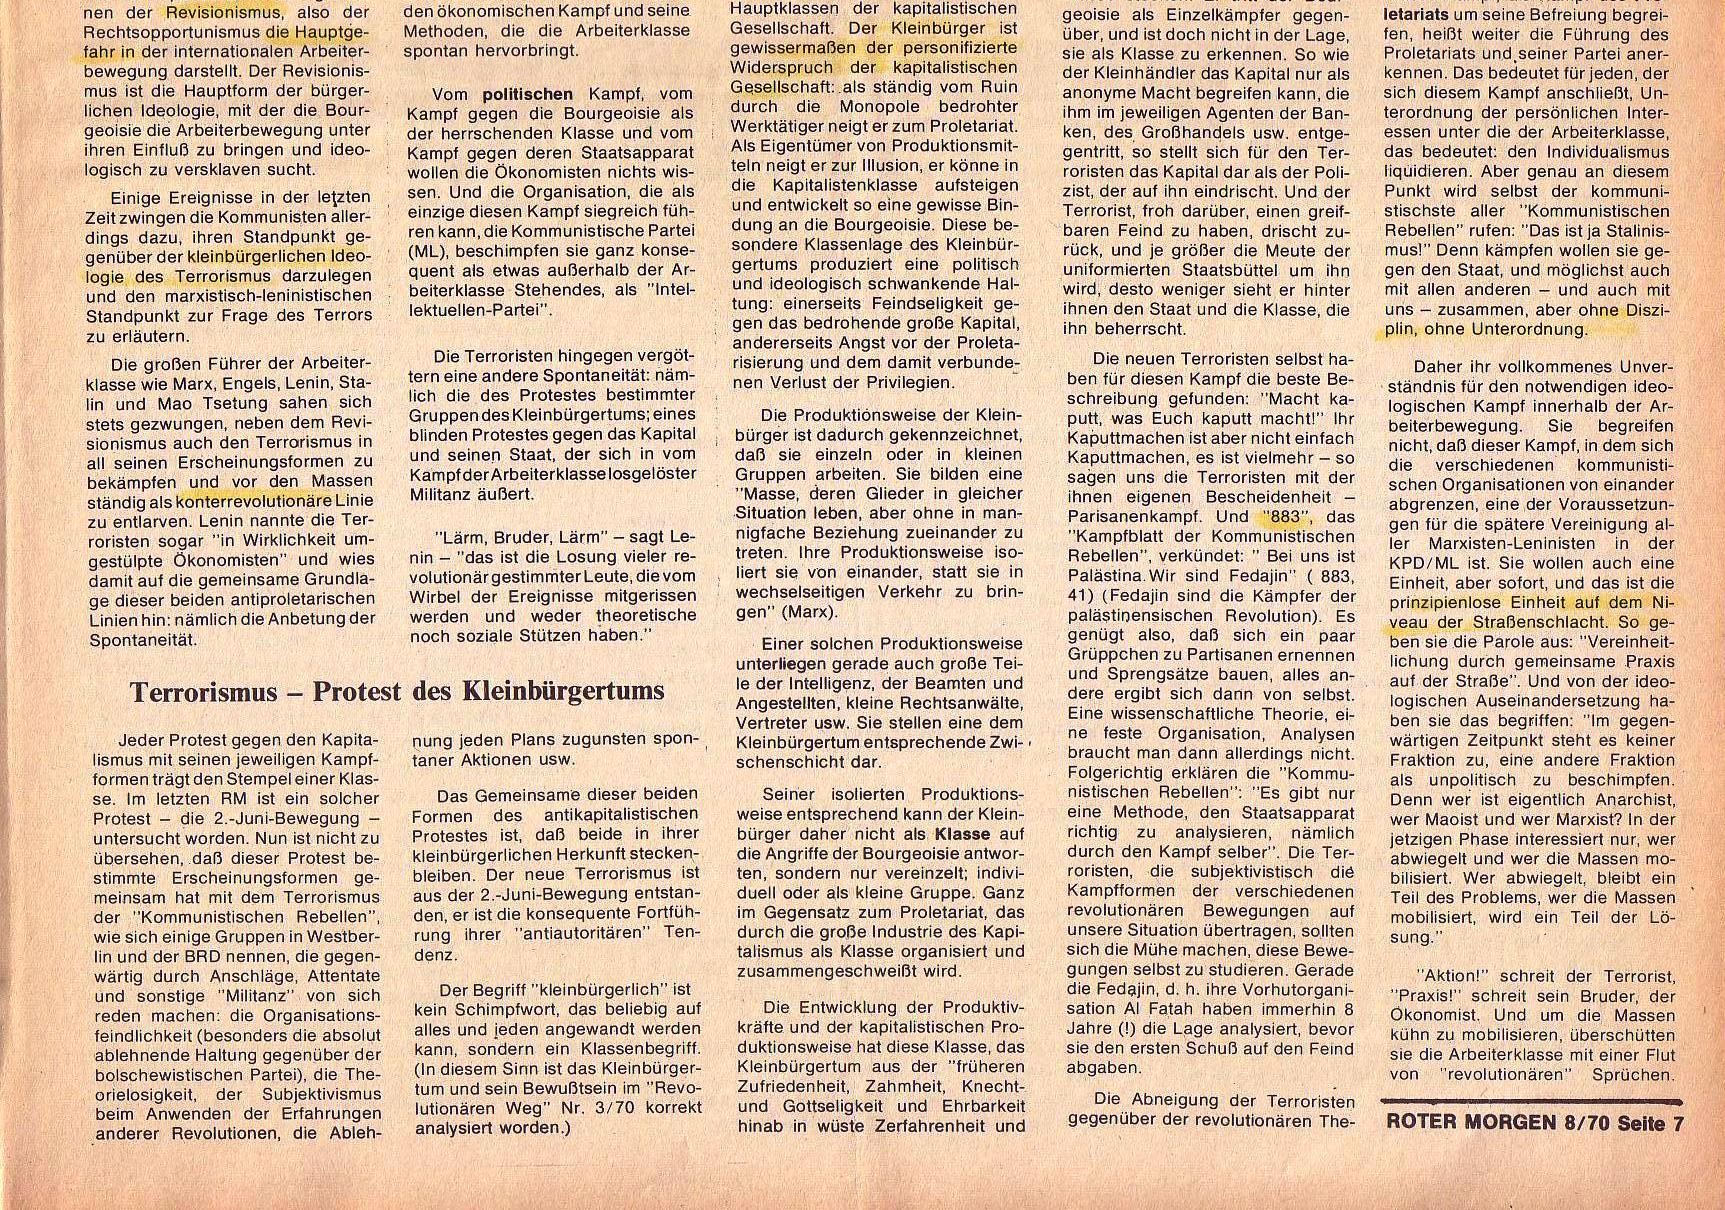 Roter Morgen, 4. Jg., September 1970, Nr. 8, Seite 7b